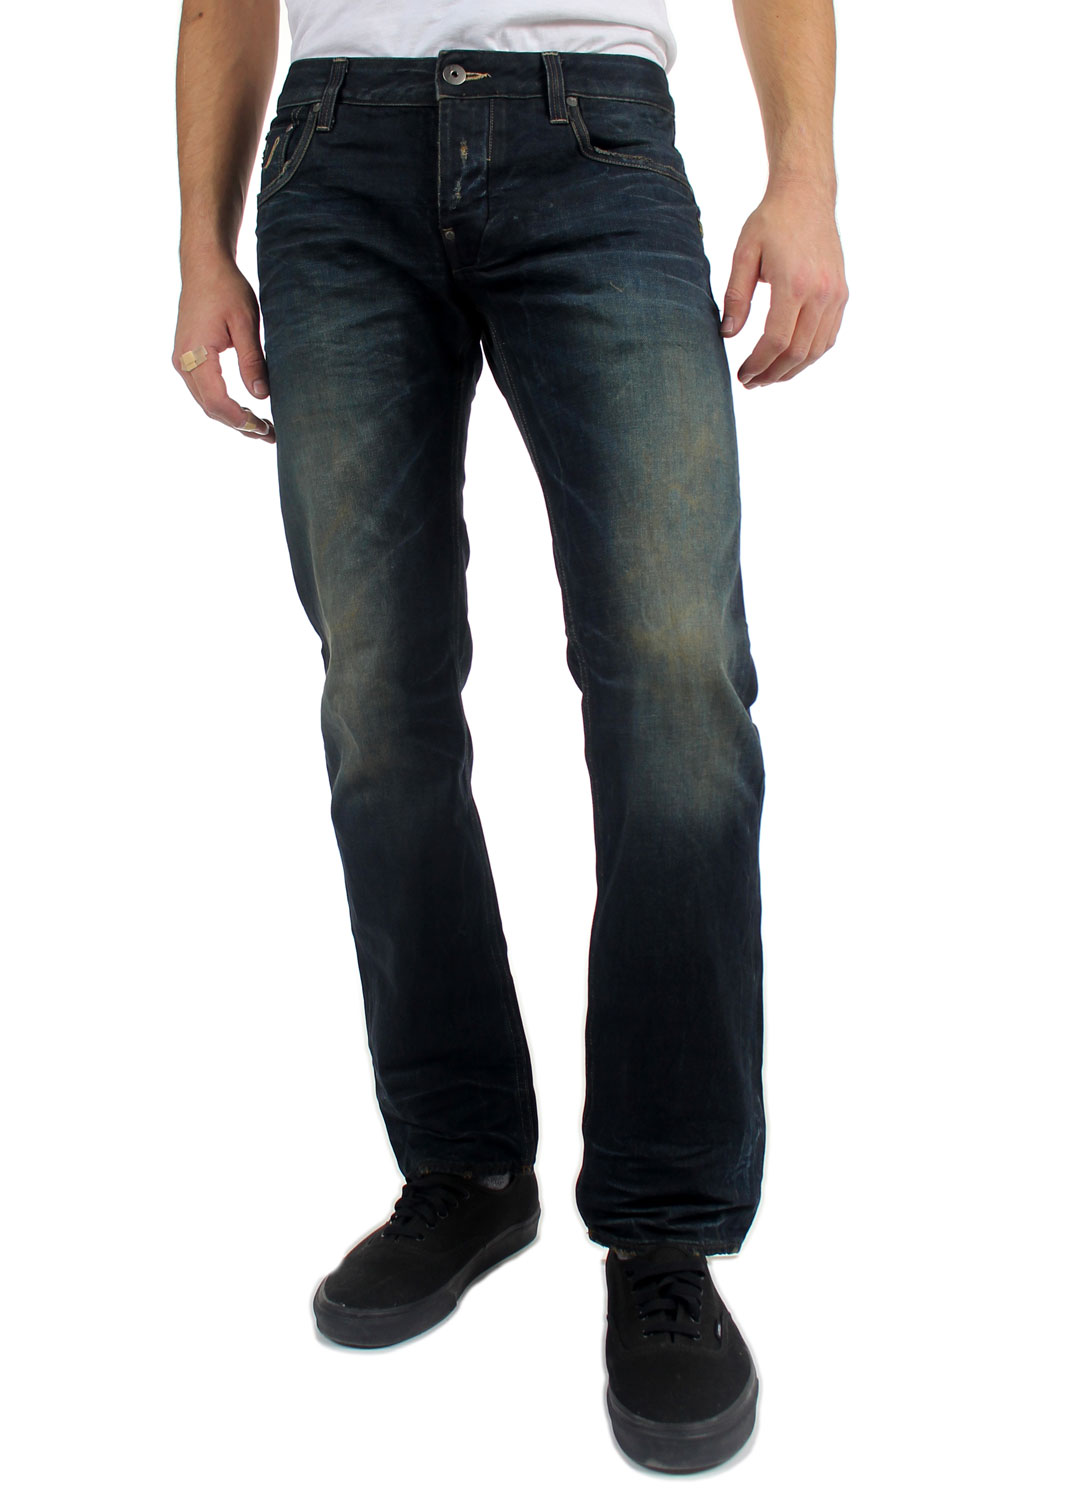 G-Star Attacc Straight Jeans Brooklyn Denim 51008.395.001 - Free Shipping  at LASC